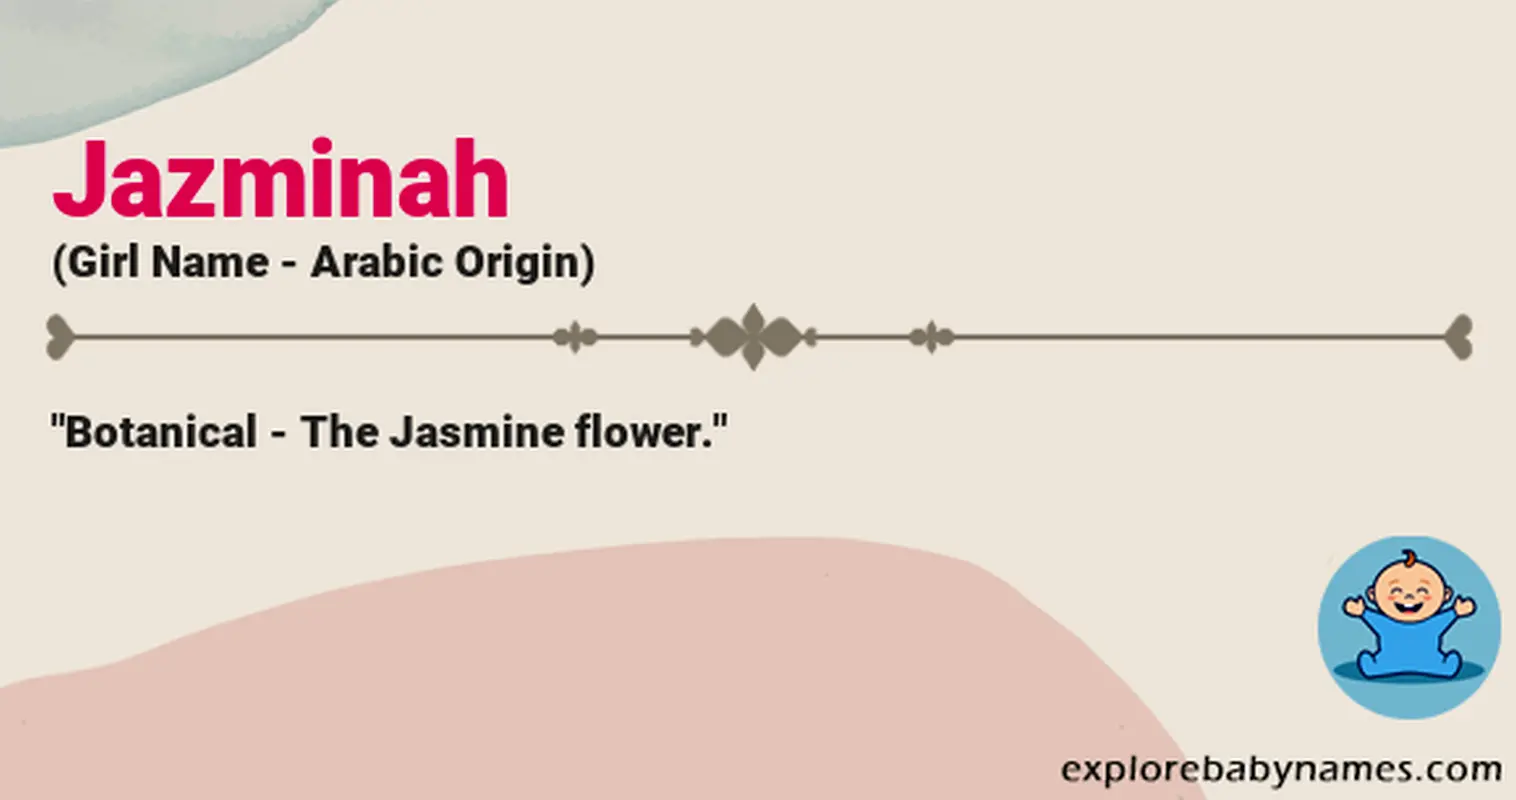 Meaning of Jazminah